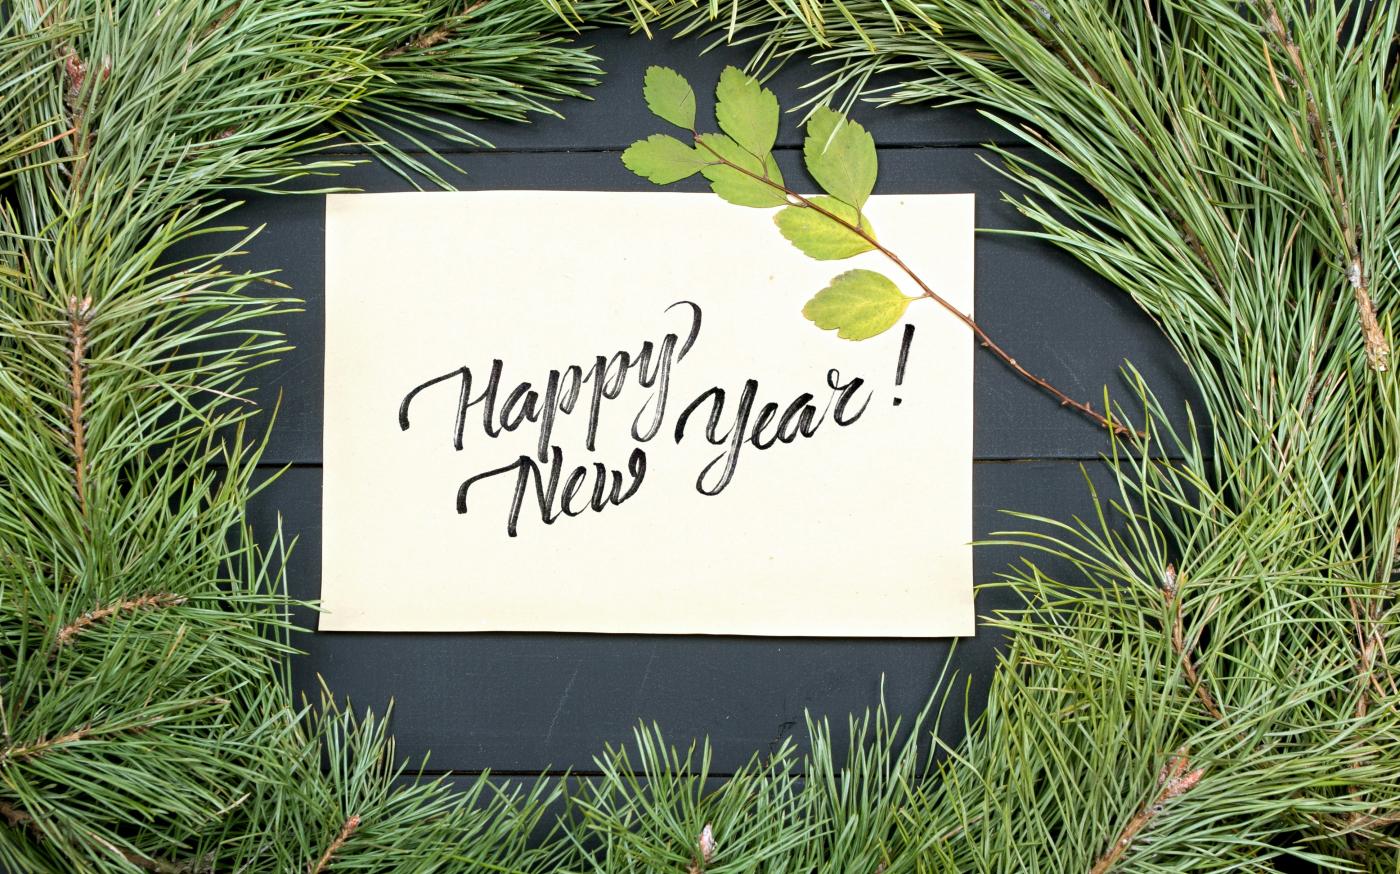 a happy new year's card on top of a pine tree by Kostiantyn Li courtesy of Unsplash.